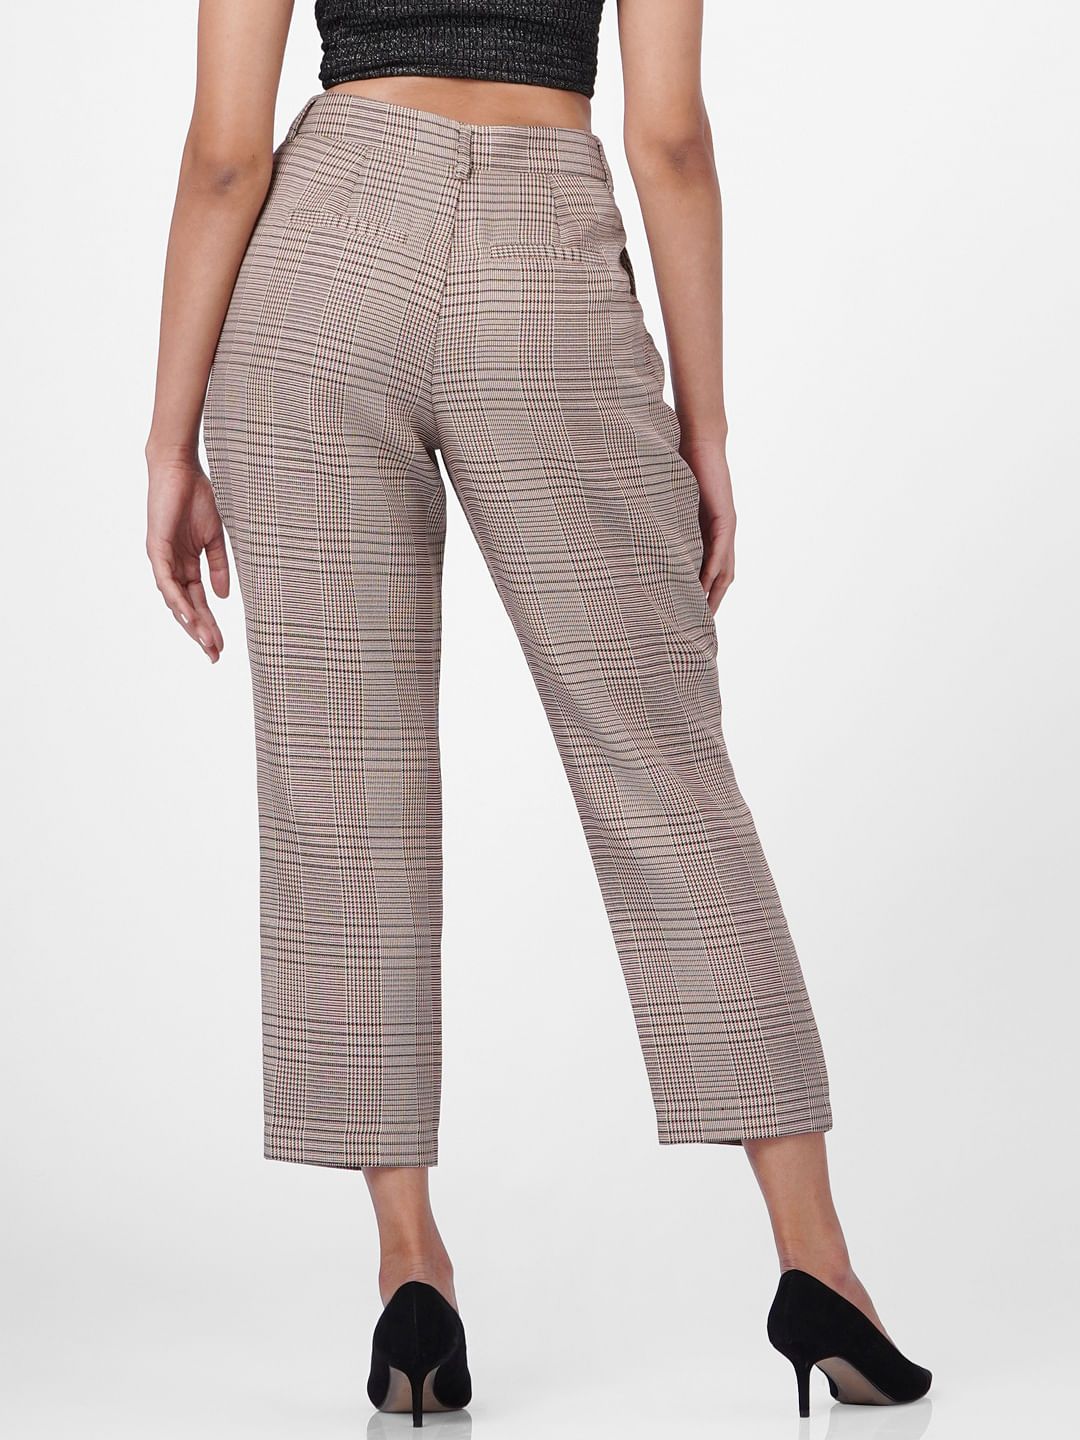 Buy Lymio Women Trousers  Girls Trousers P15 XS Grey at Amazonin